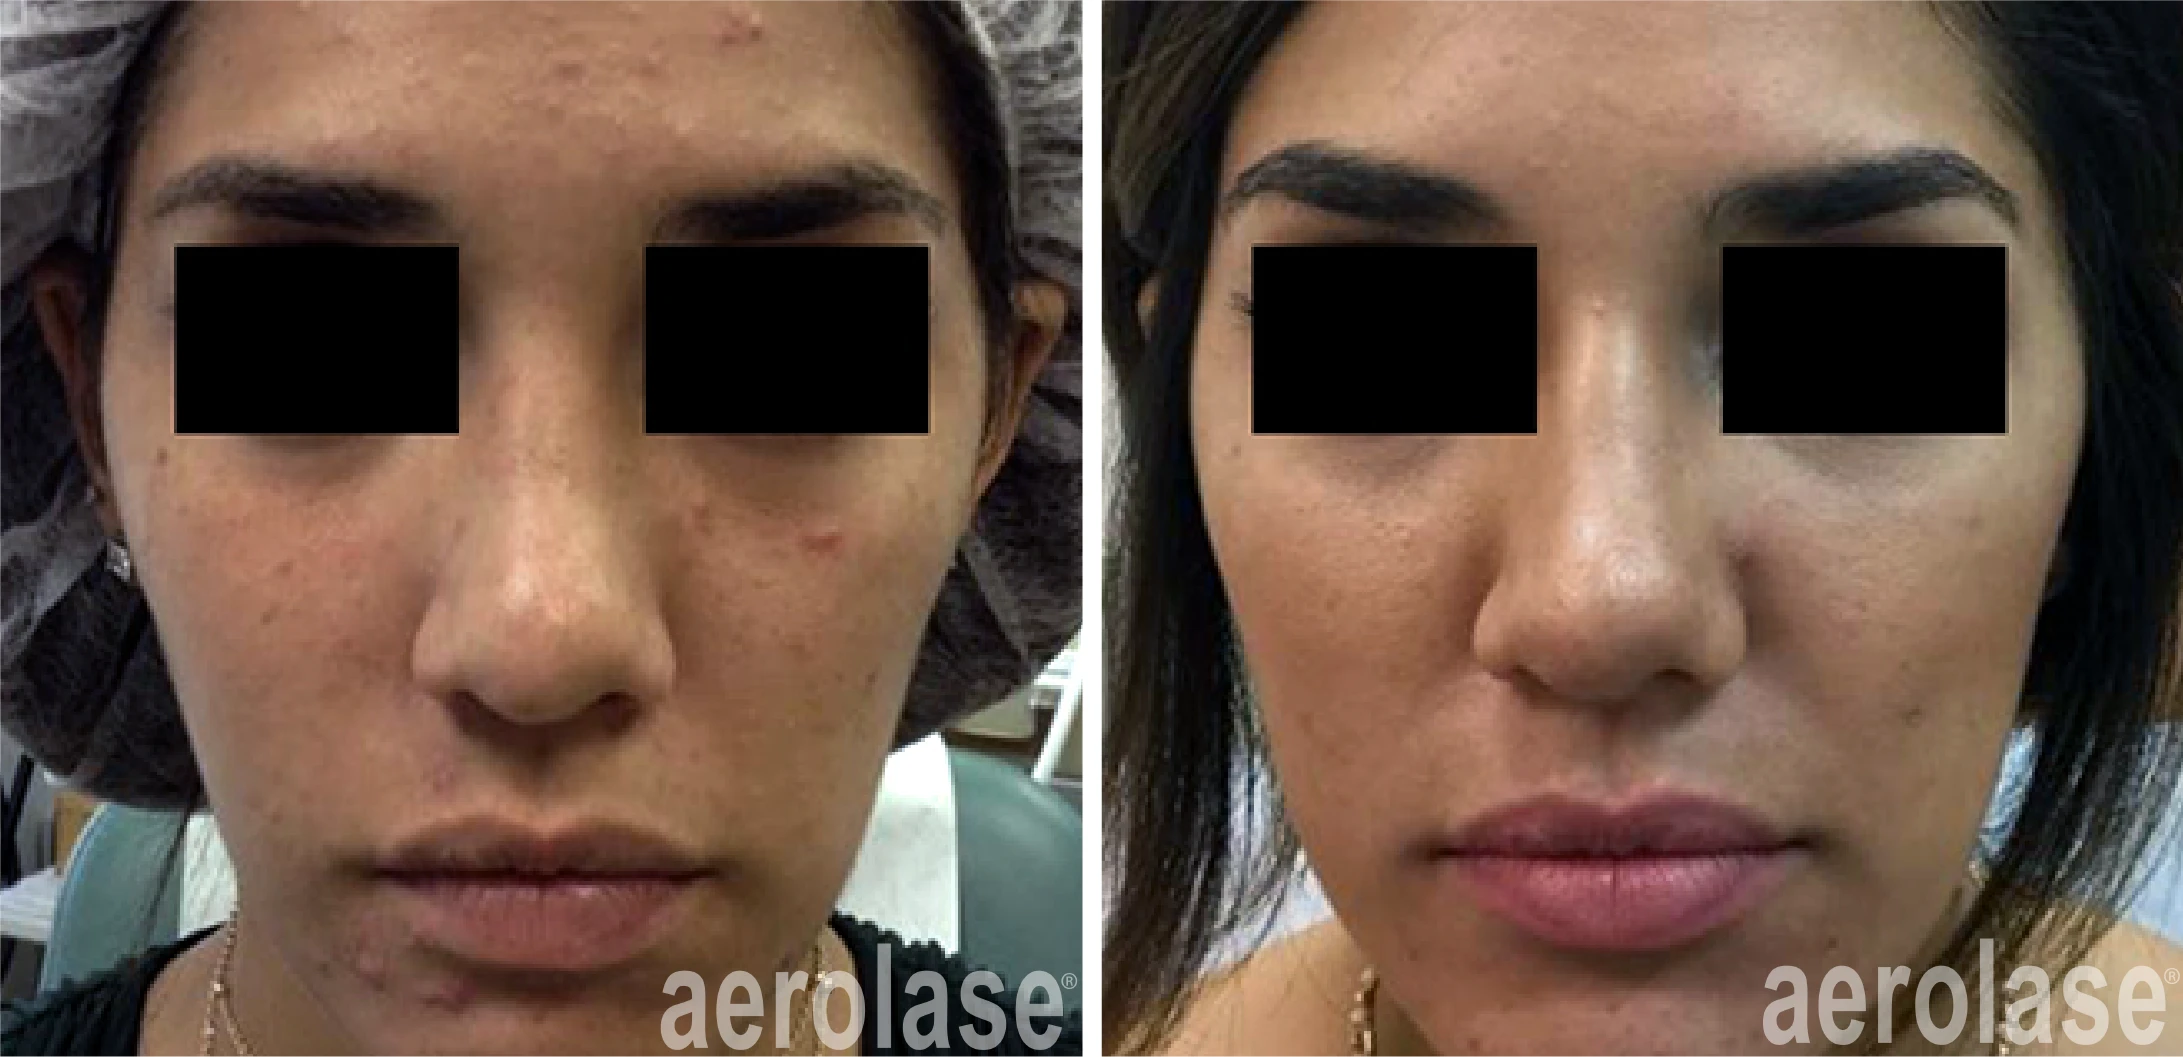 aerolase-mark-nestor-acne-2-months-after-4-treatments